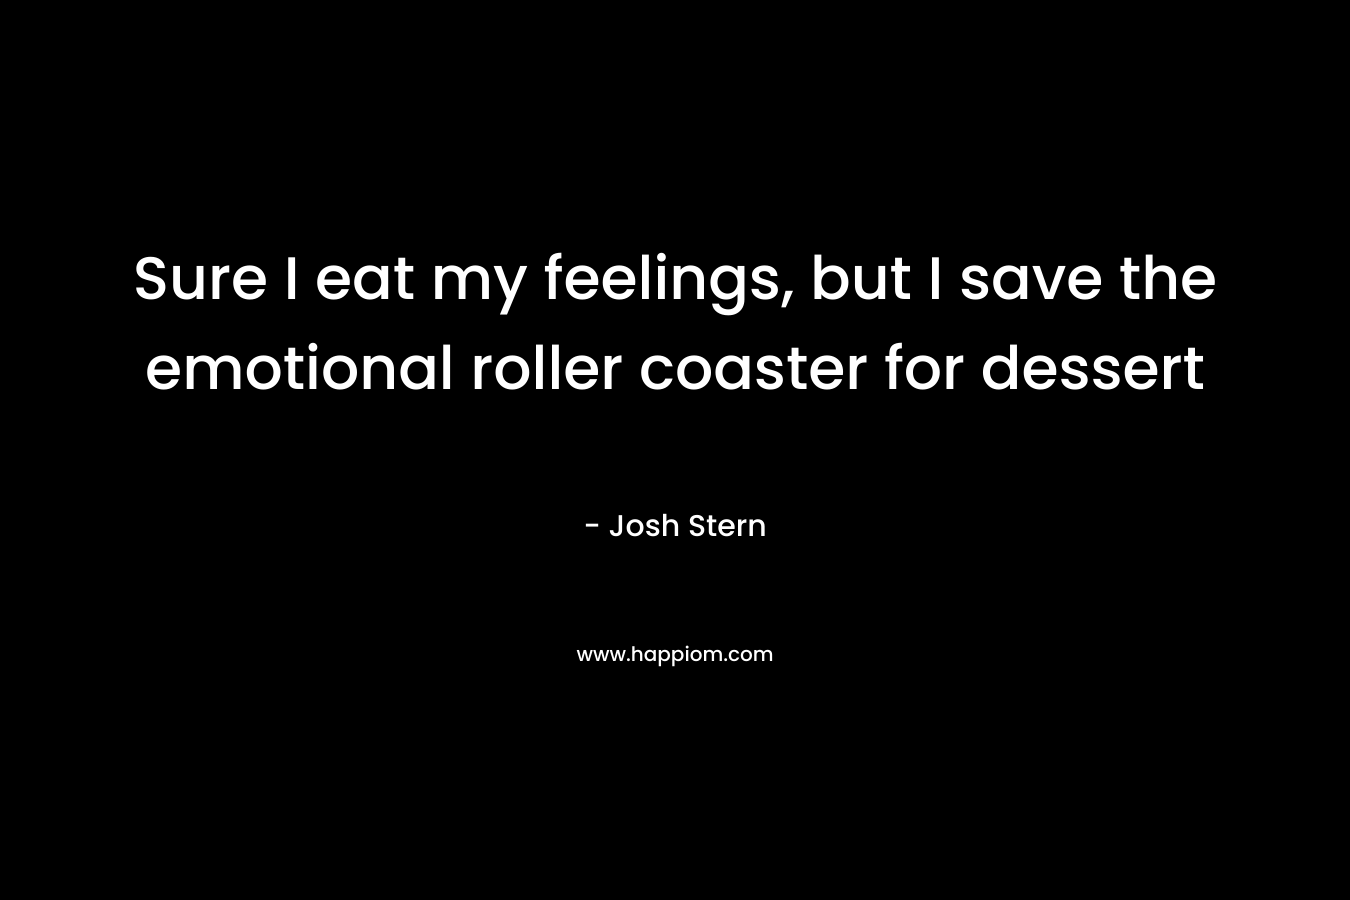 Sure I eat my feelings, but I save the emotional roller coaster for dessert